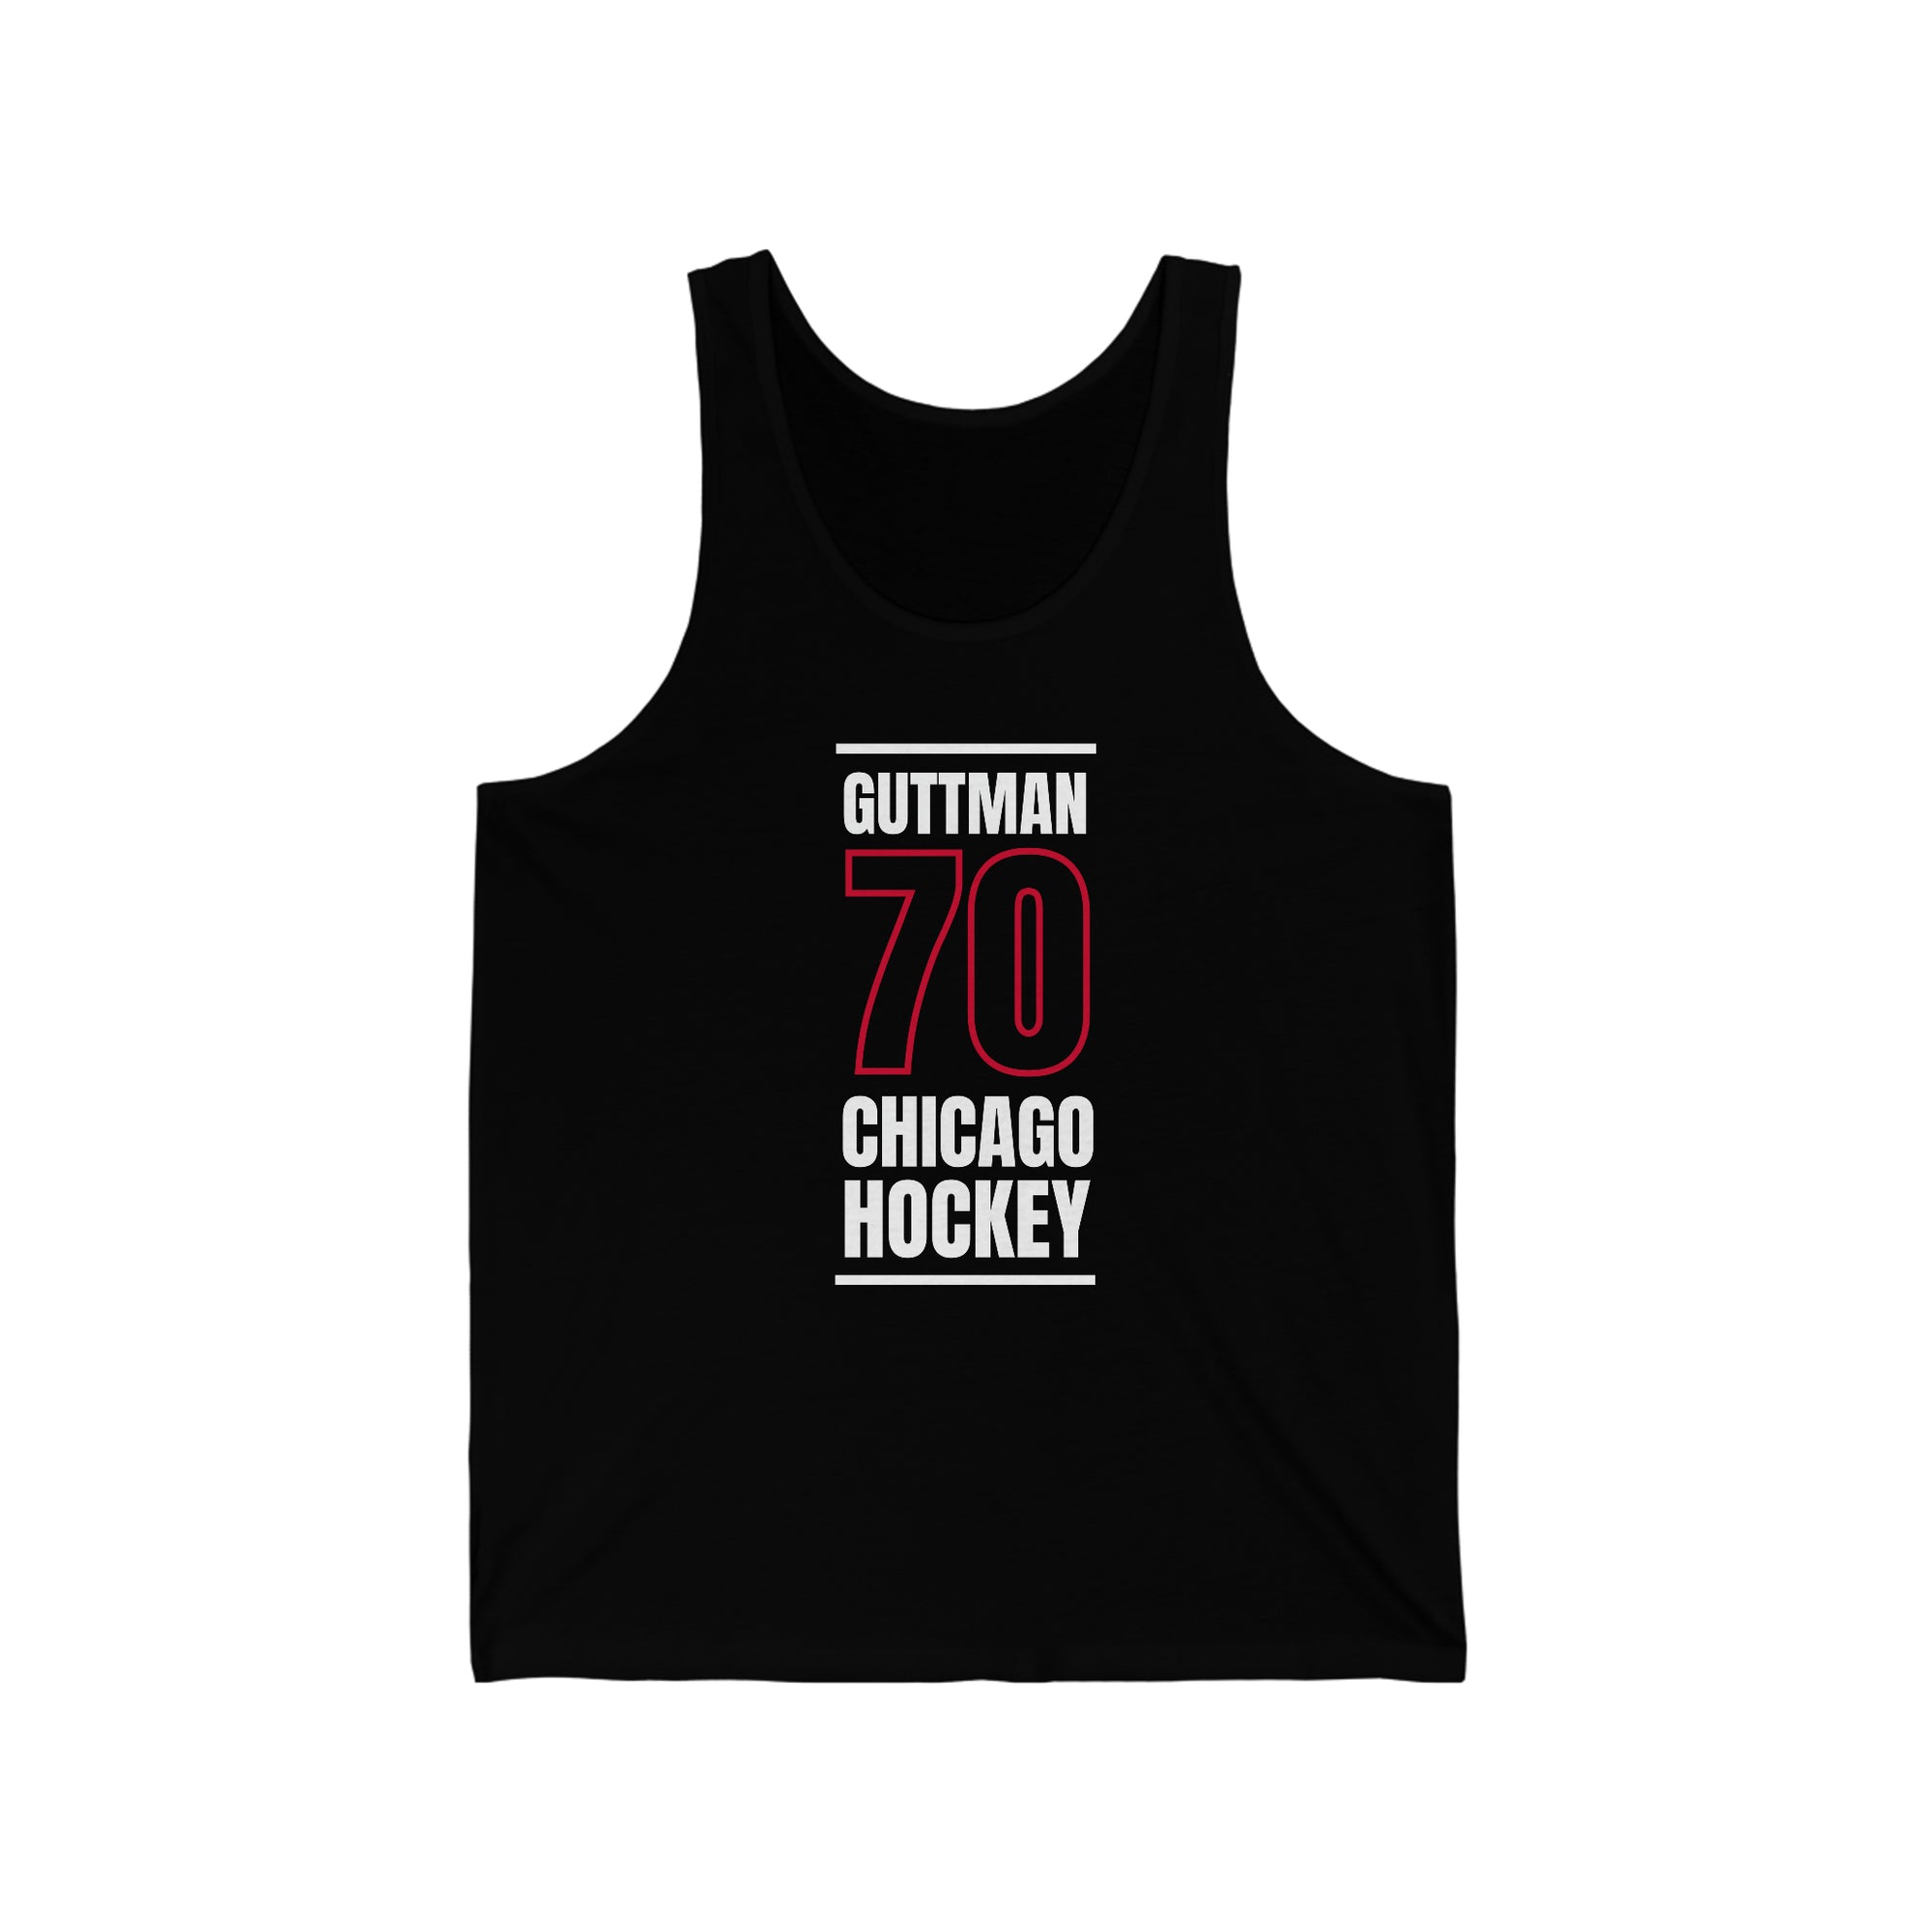 Guttman 70 Chicago Hockey Black Vertical Design Unisex Jersey Tank Top